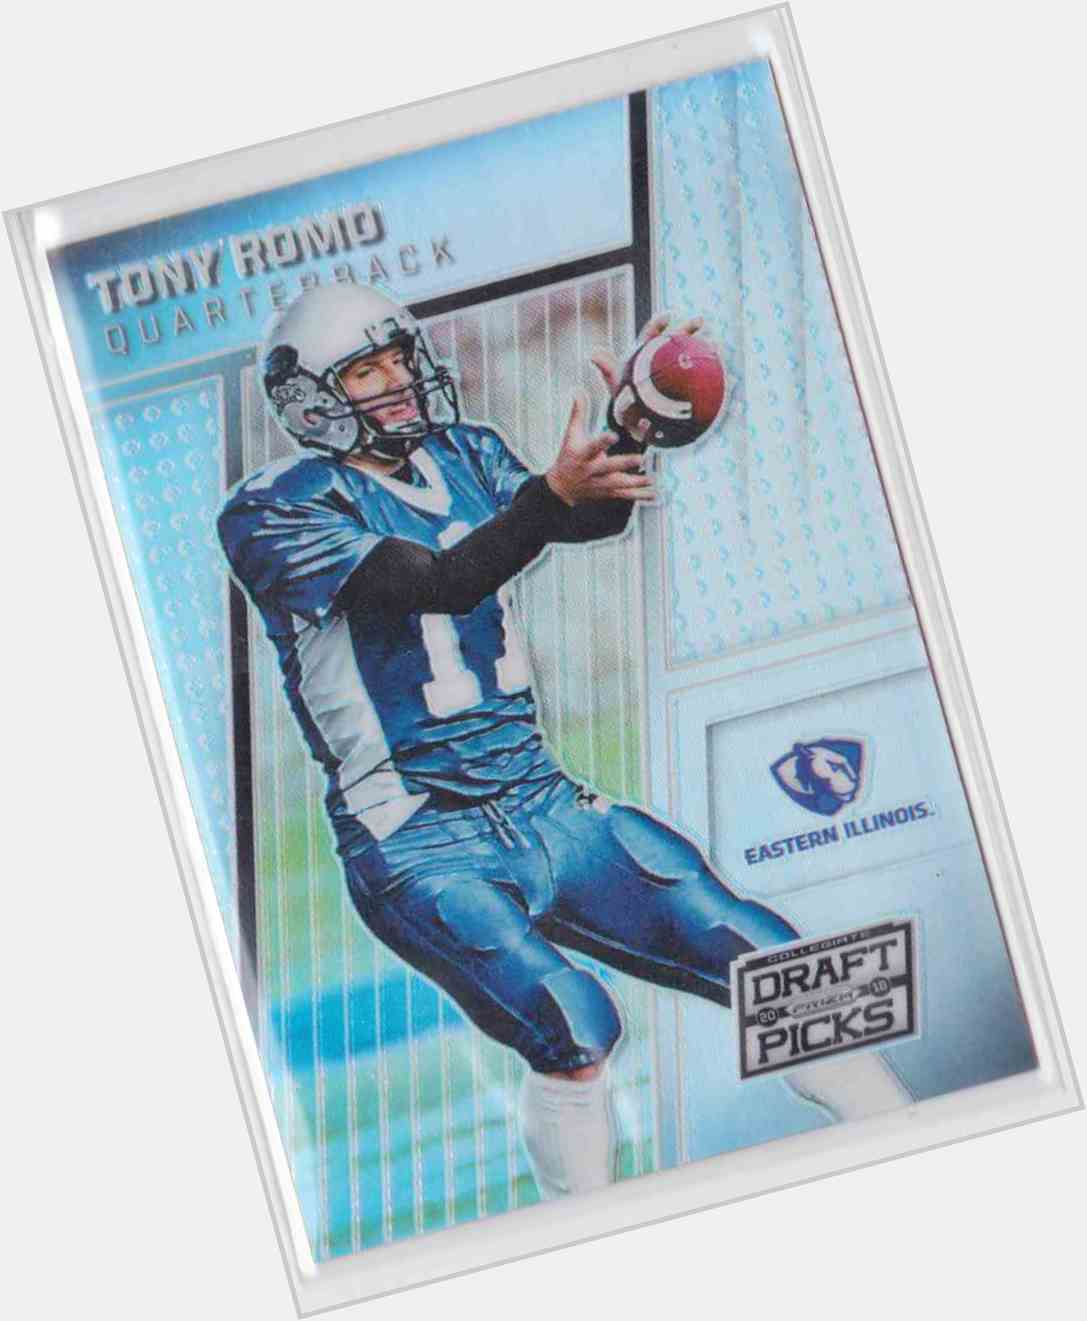 Happy Birthday Tony Romo!

As a quarterback do you consider him: common, average, elite, or a Hall of Famer? 